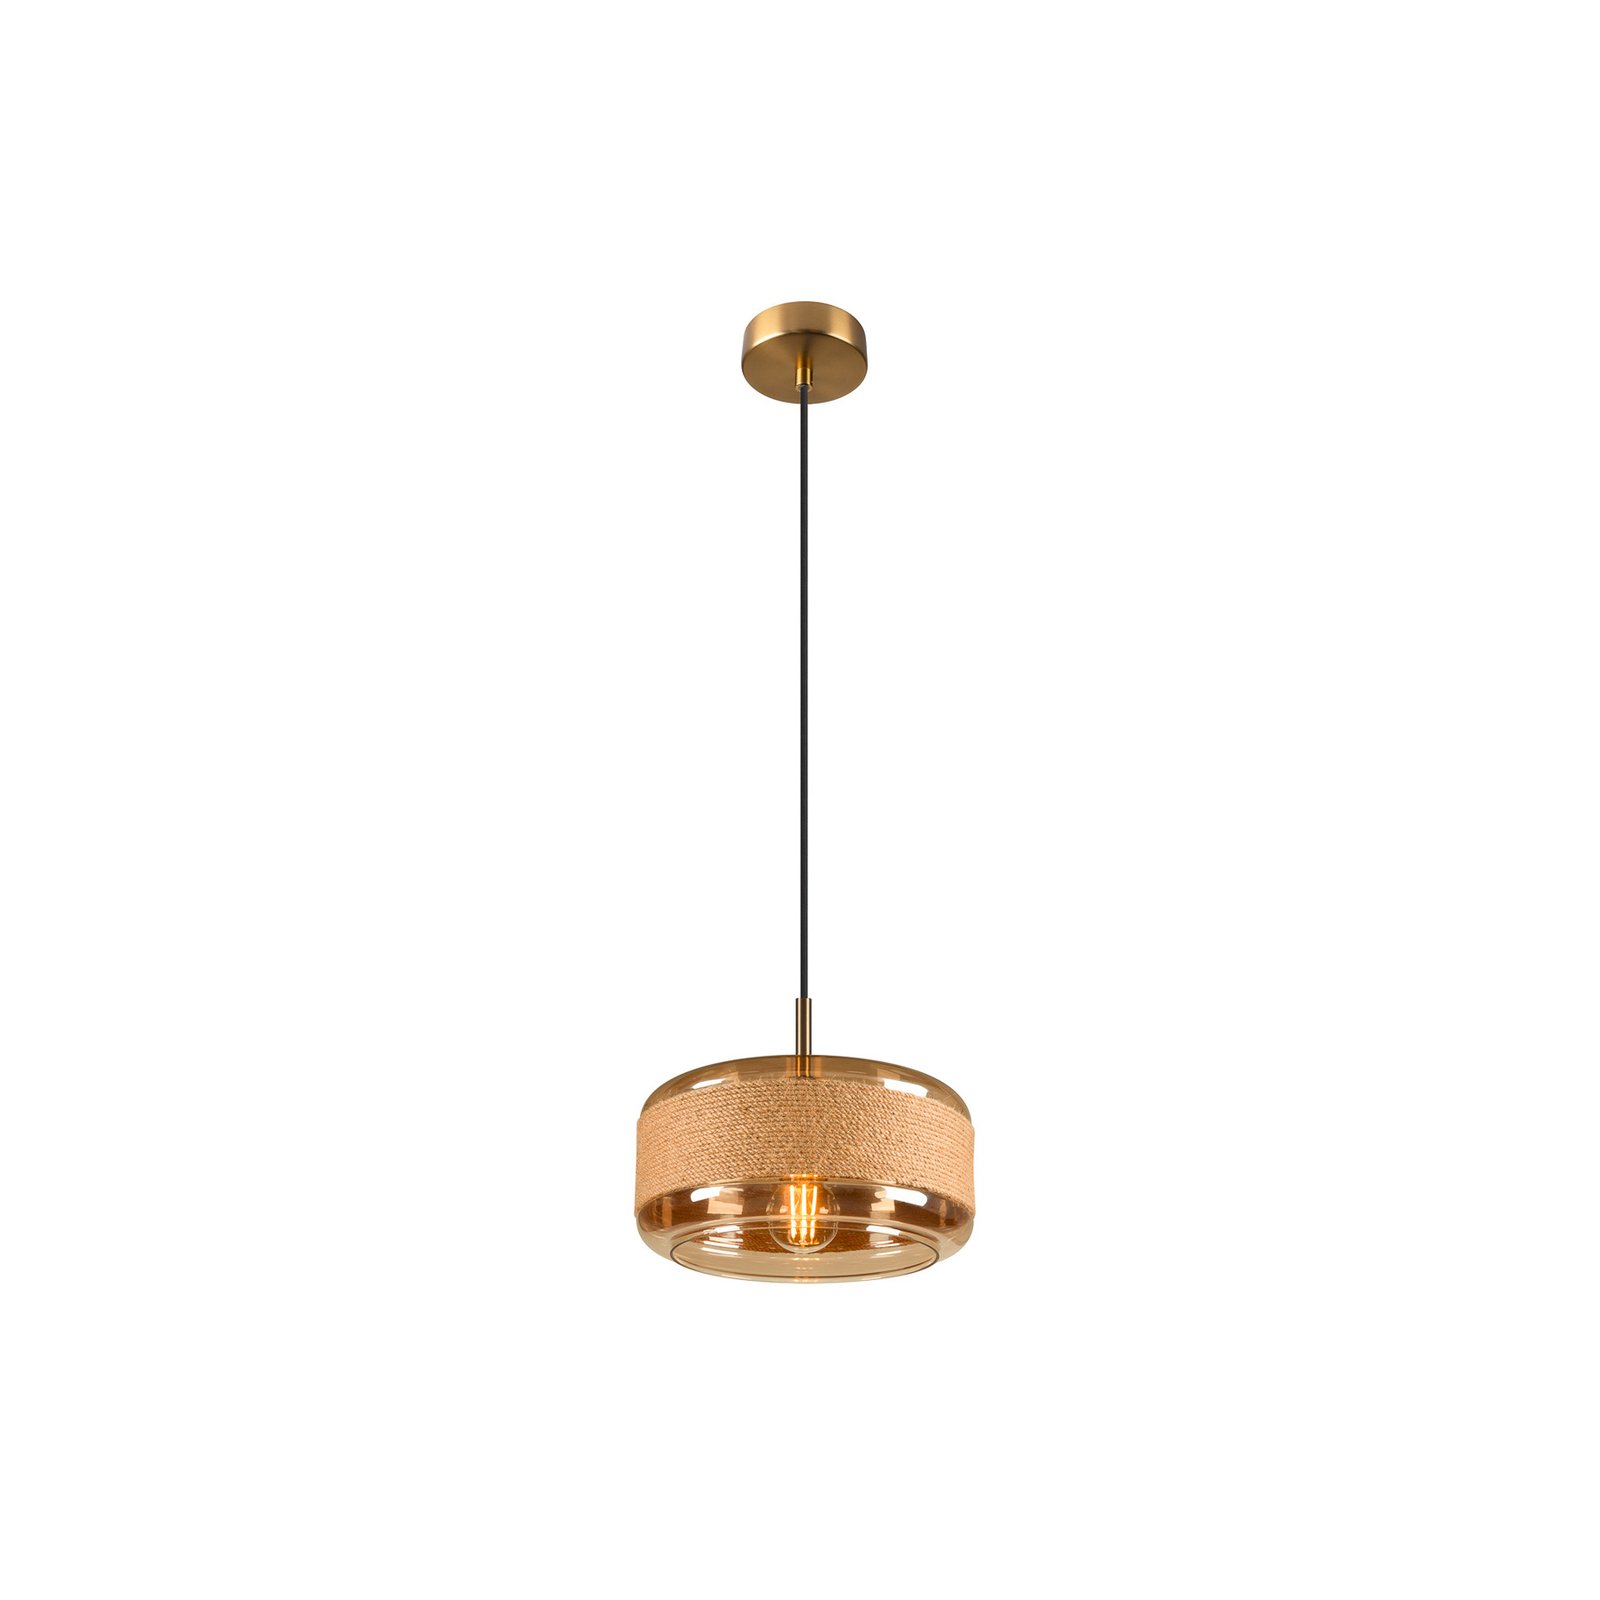 Lampa wisząca Pantilo Rope 27, kolor złoty, stal, Ø 27 cm